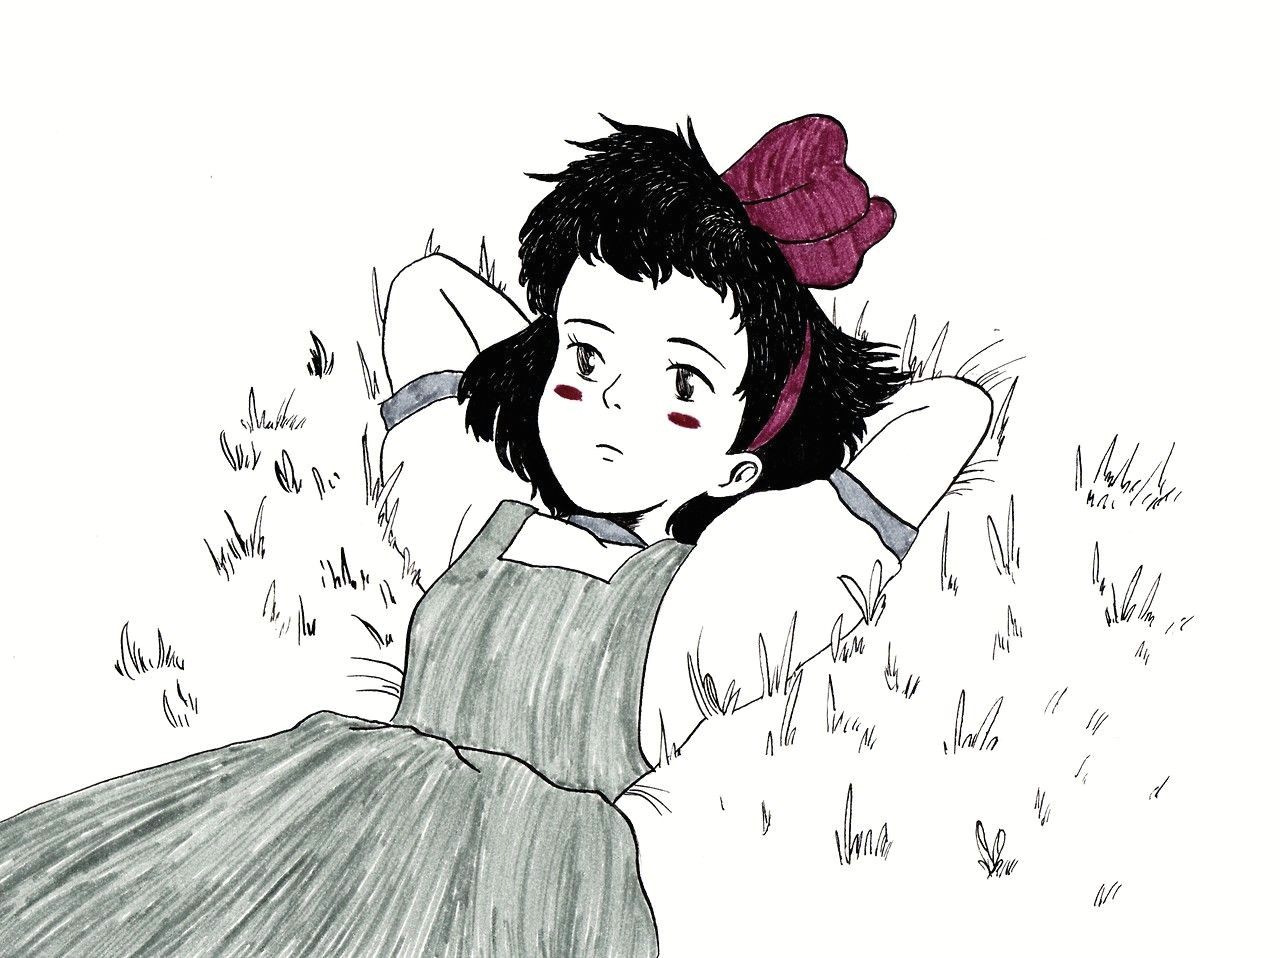 Drawing Expressions Tumblr Aesthetic Drawings Tumblr Manga In 2019 Pinterest Drawings